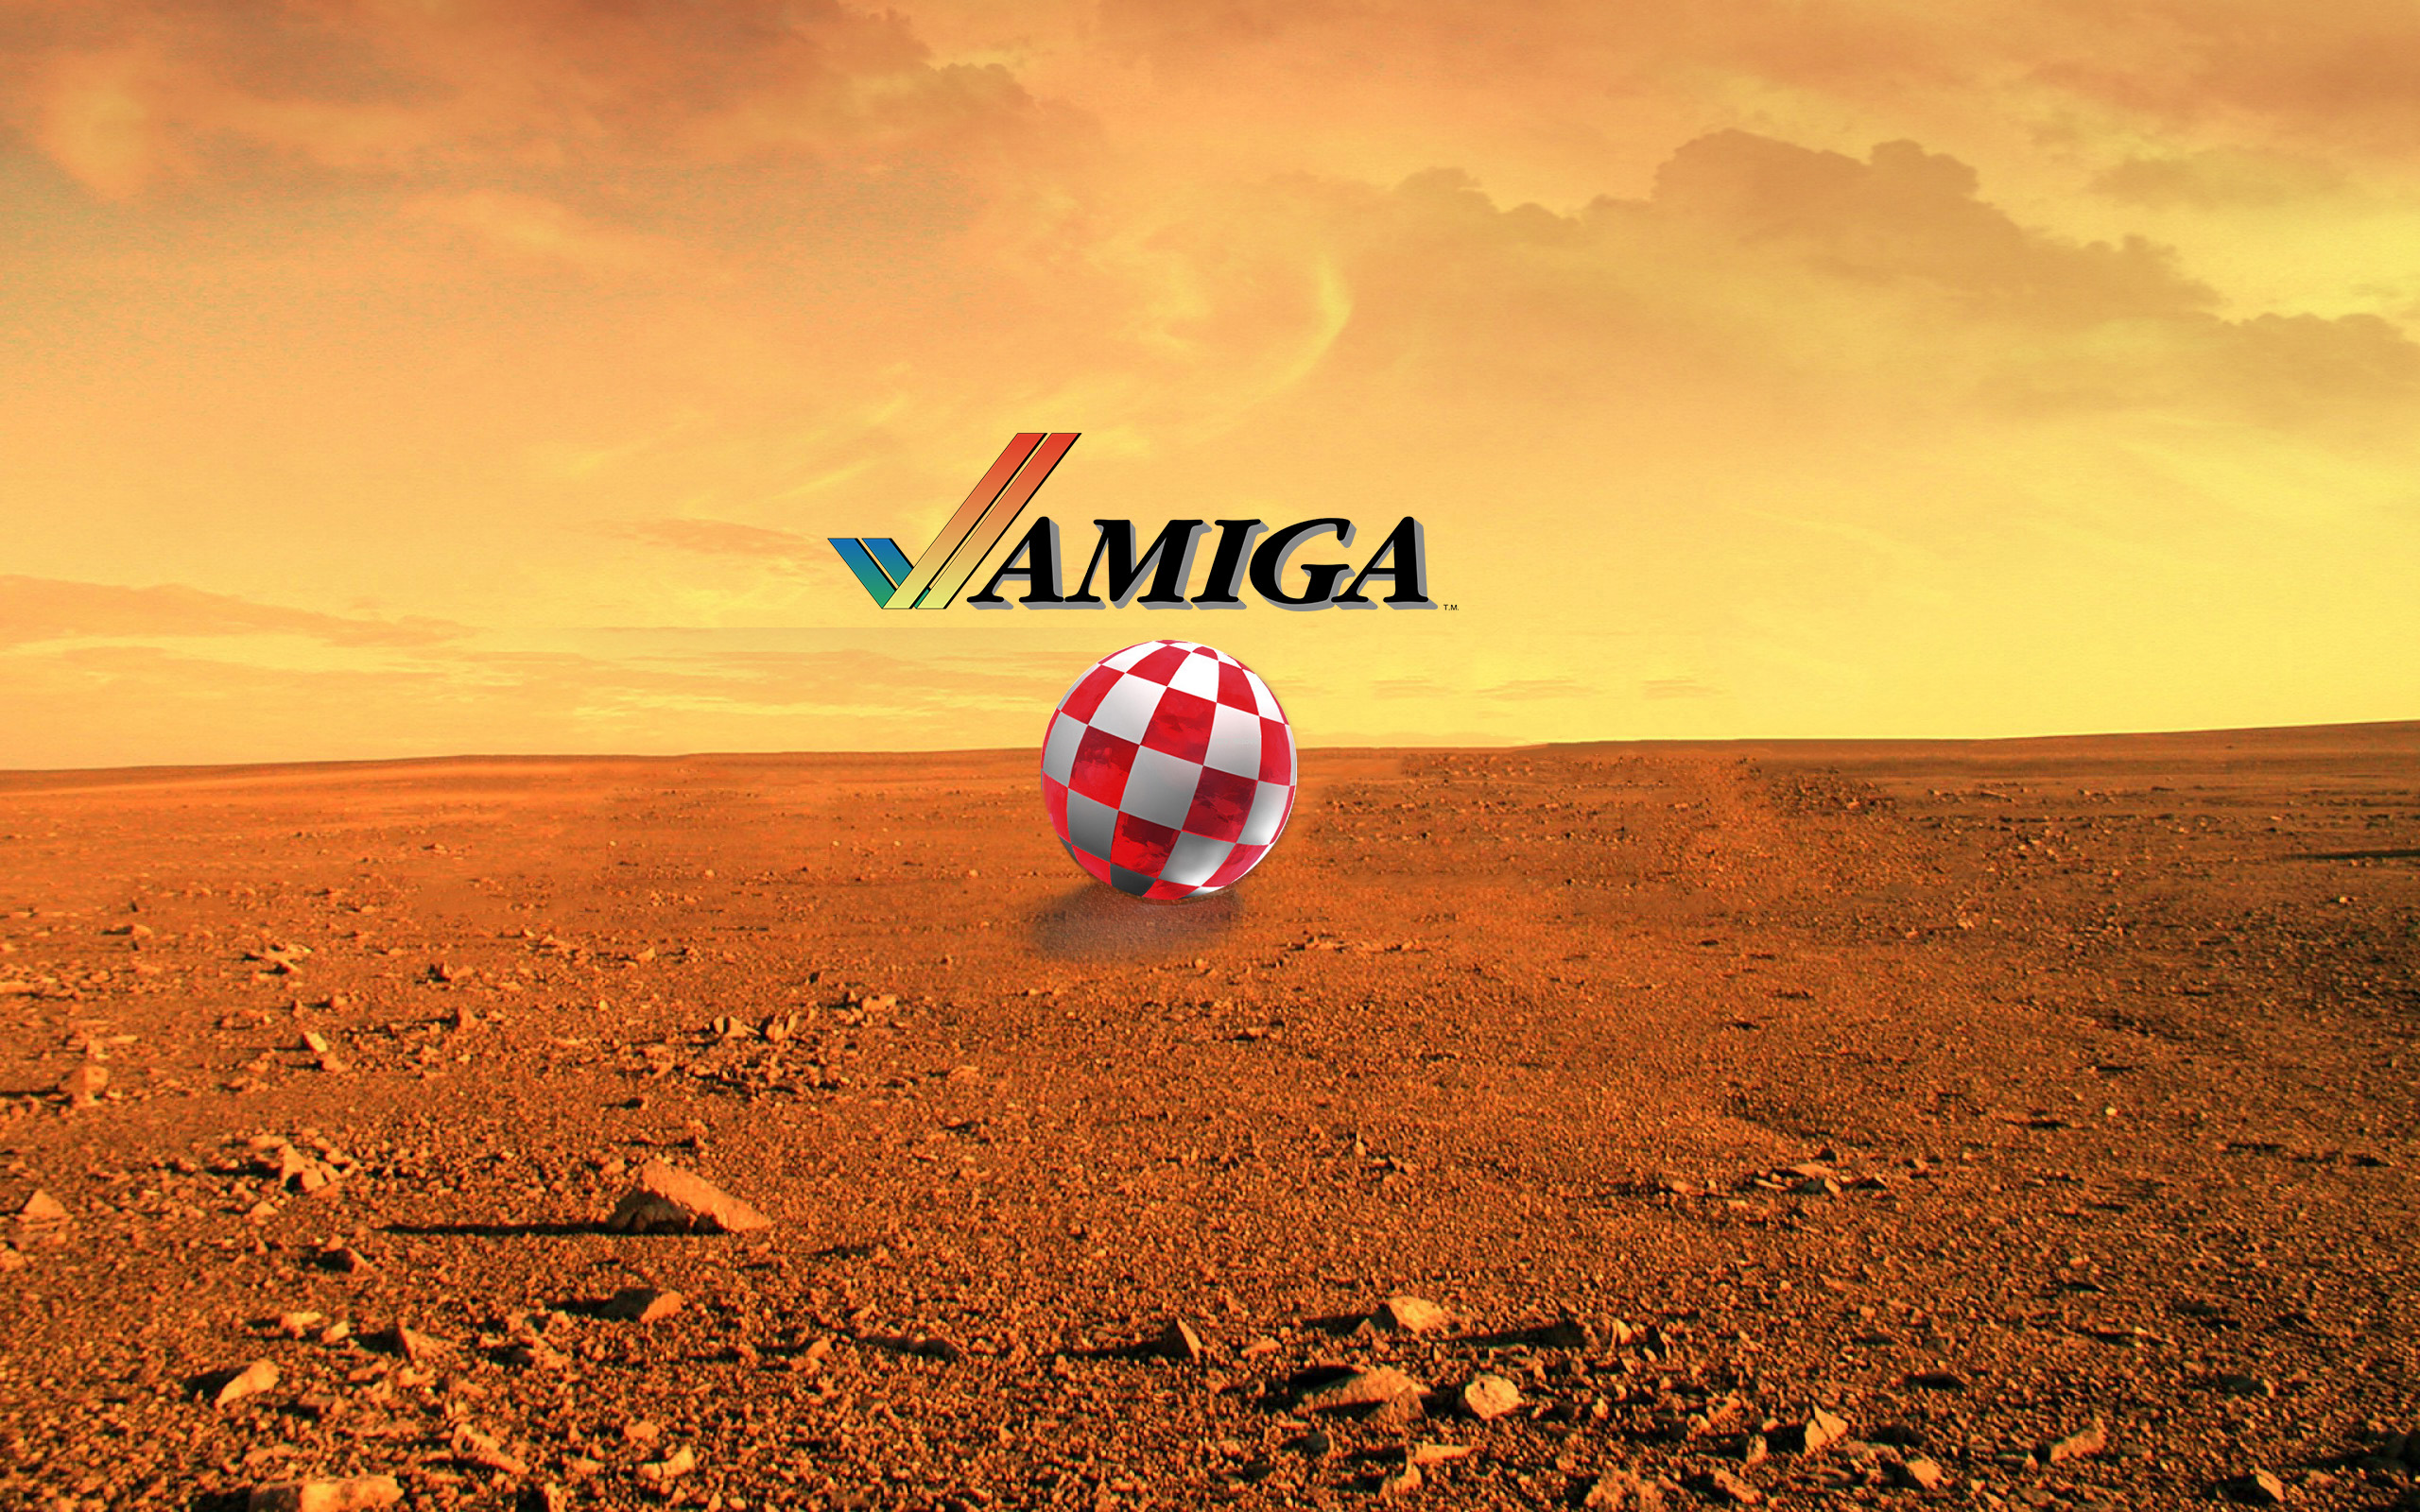 AmigaOS Boing Ball on Mars, wallpaper